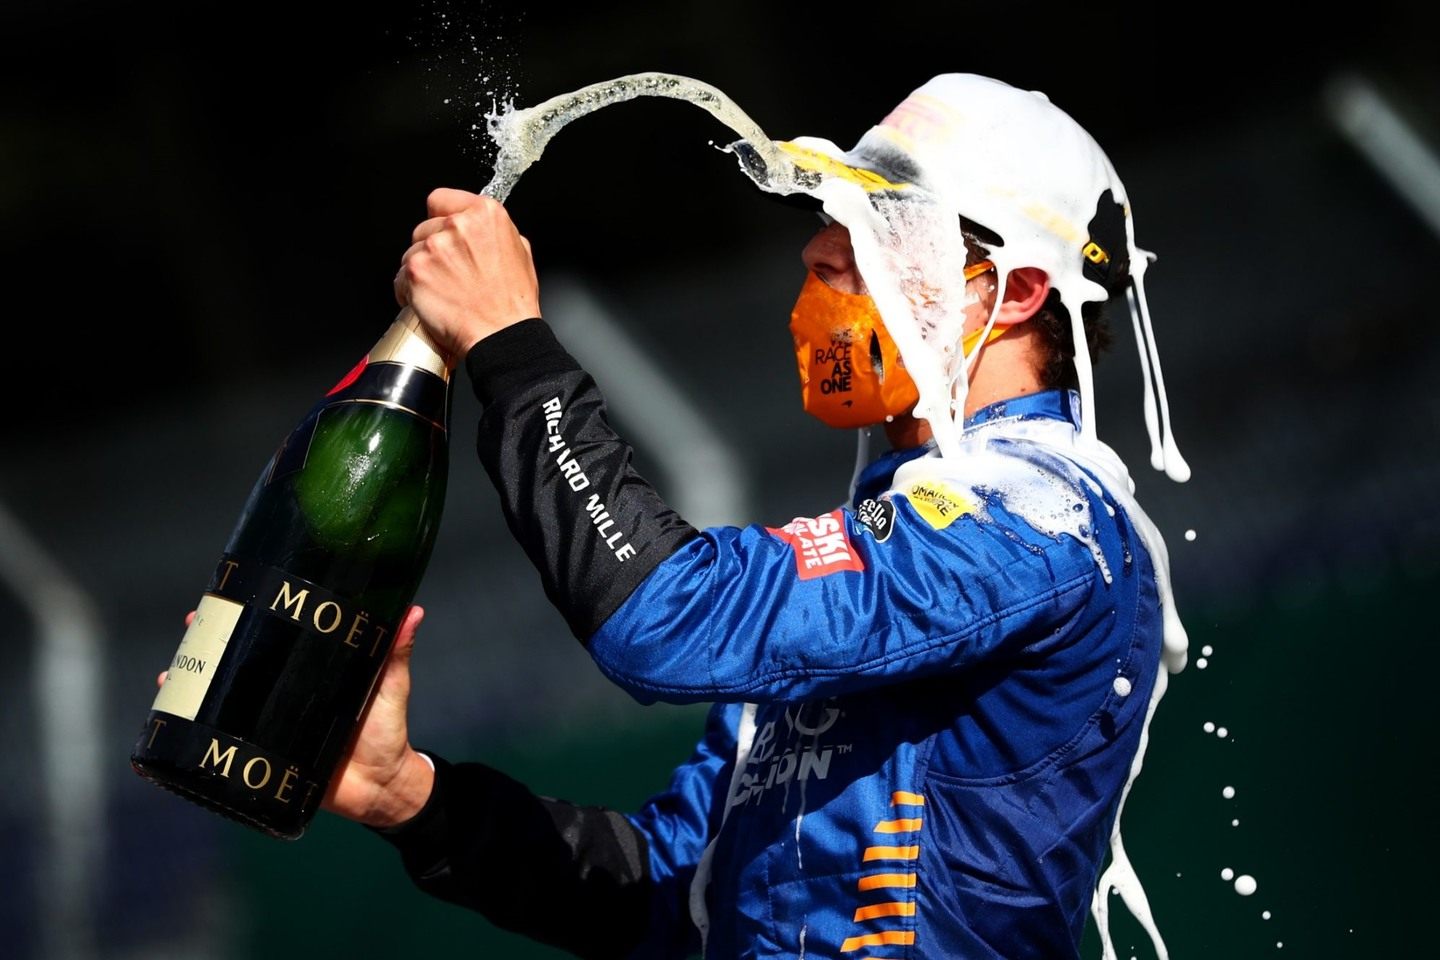 Ландо Норрис на подиуме Гран При Австрии © McLaren